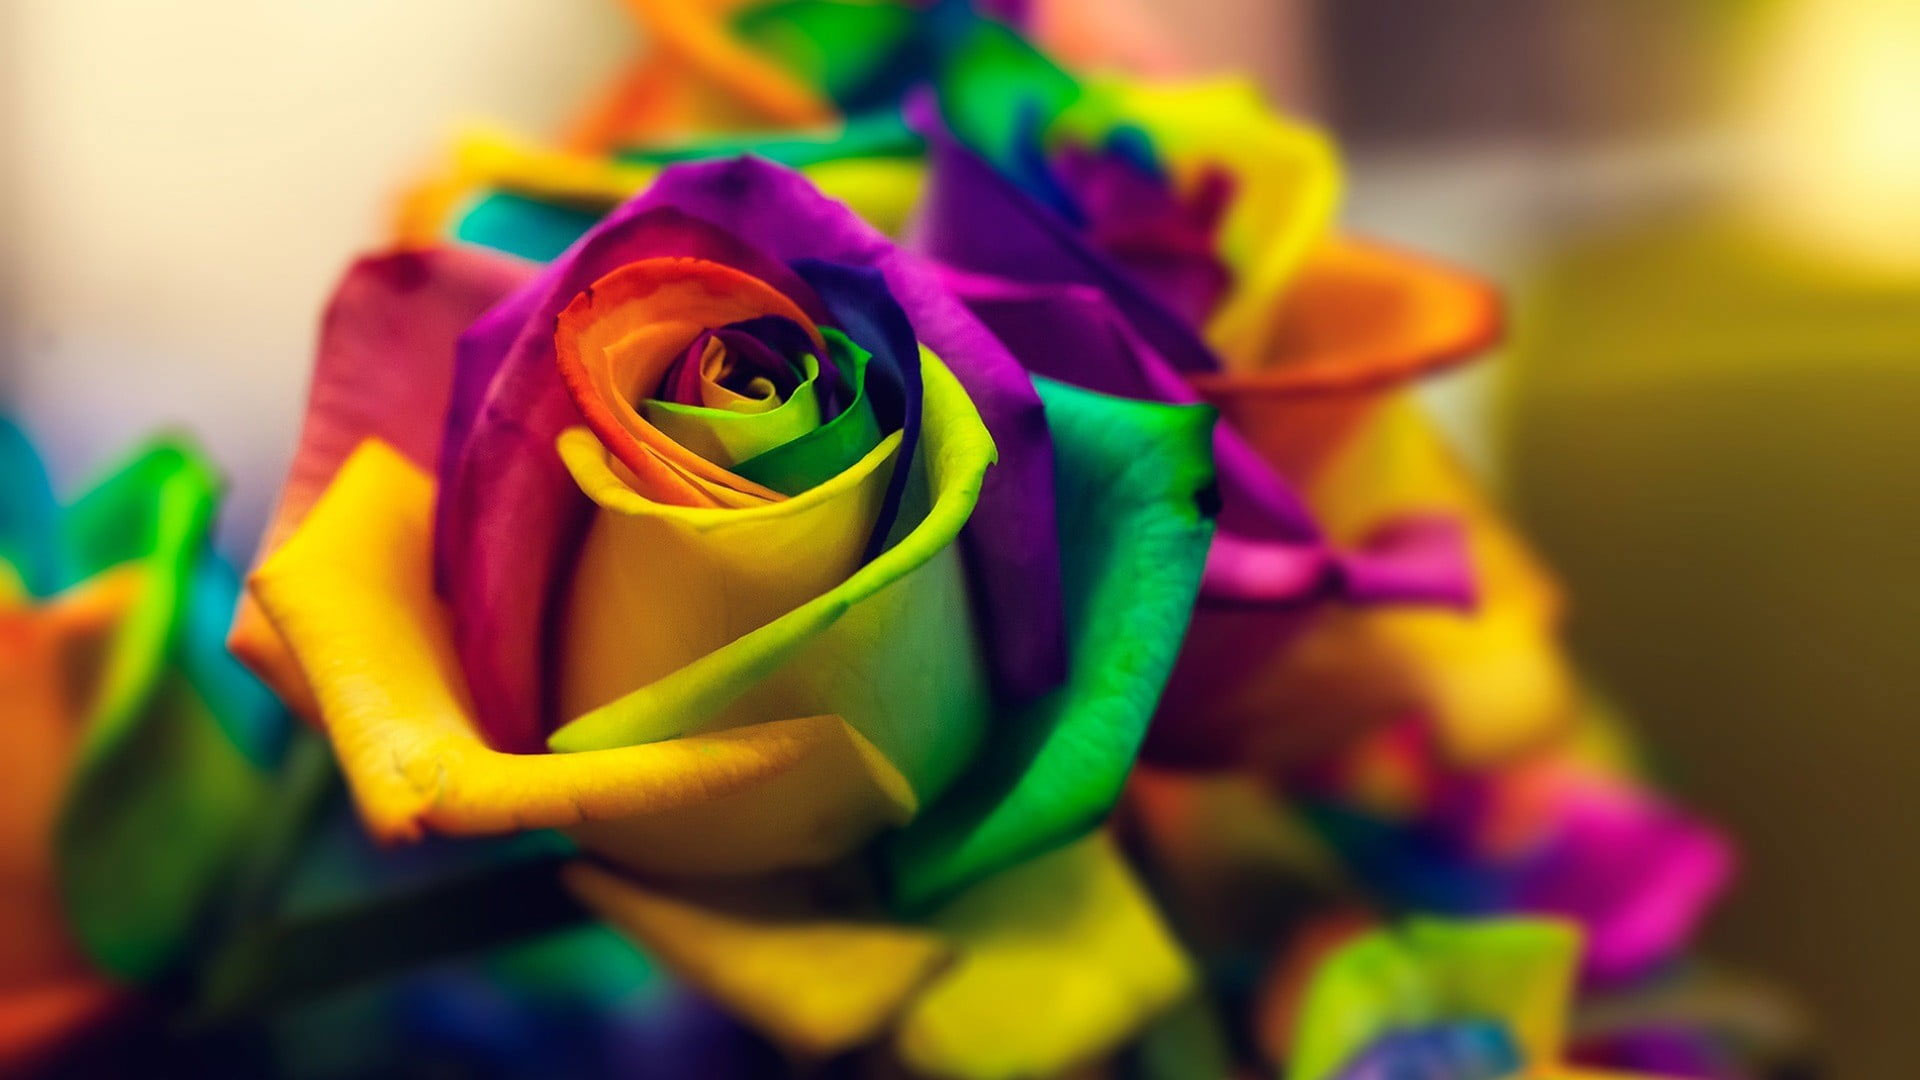 Multicolored flower wallpaper, closed photograph multicolored rose arrangement